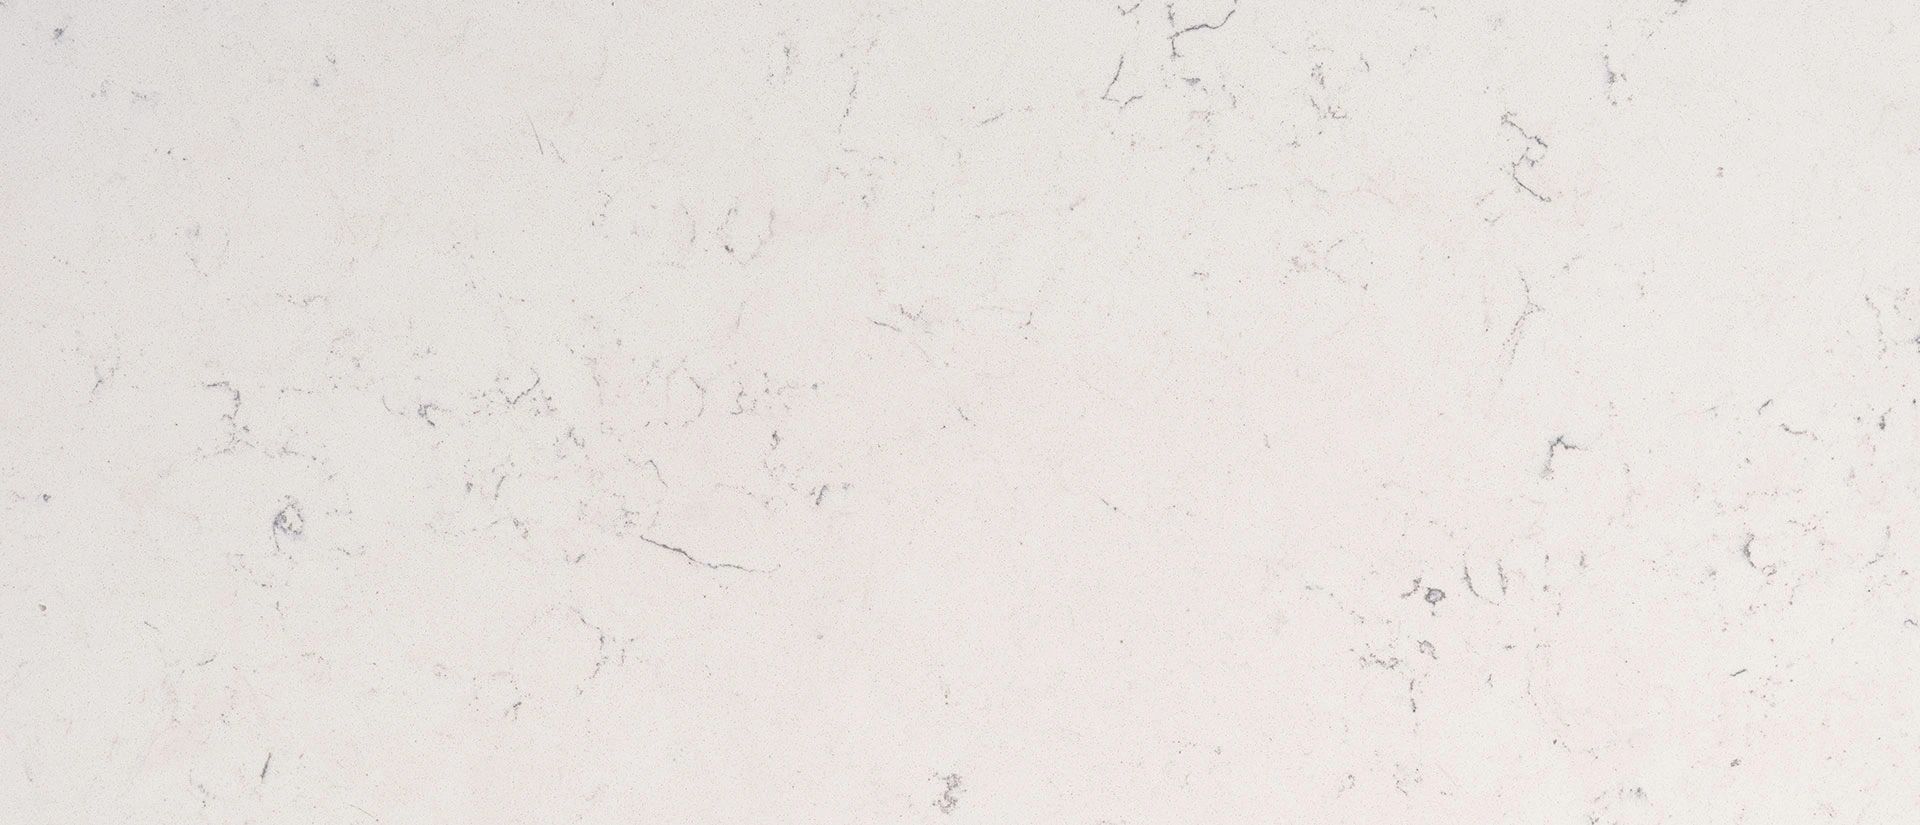 Carrara Marmi Quartz, soft white marble look quartz with whispery veins, 